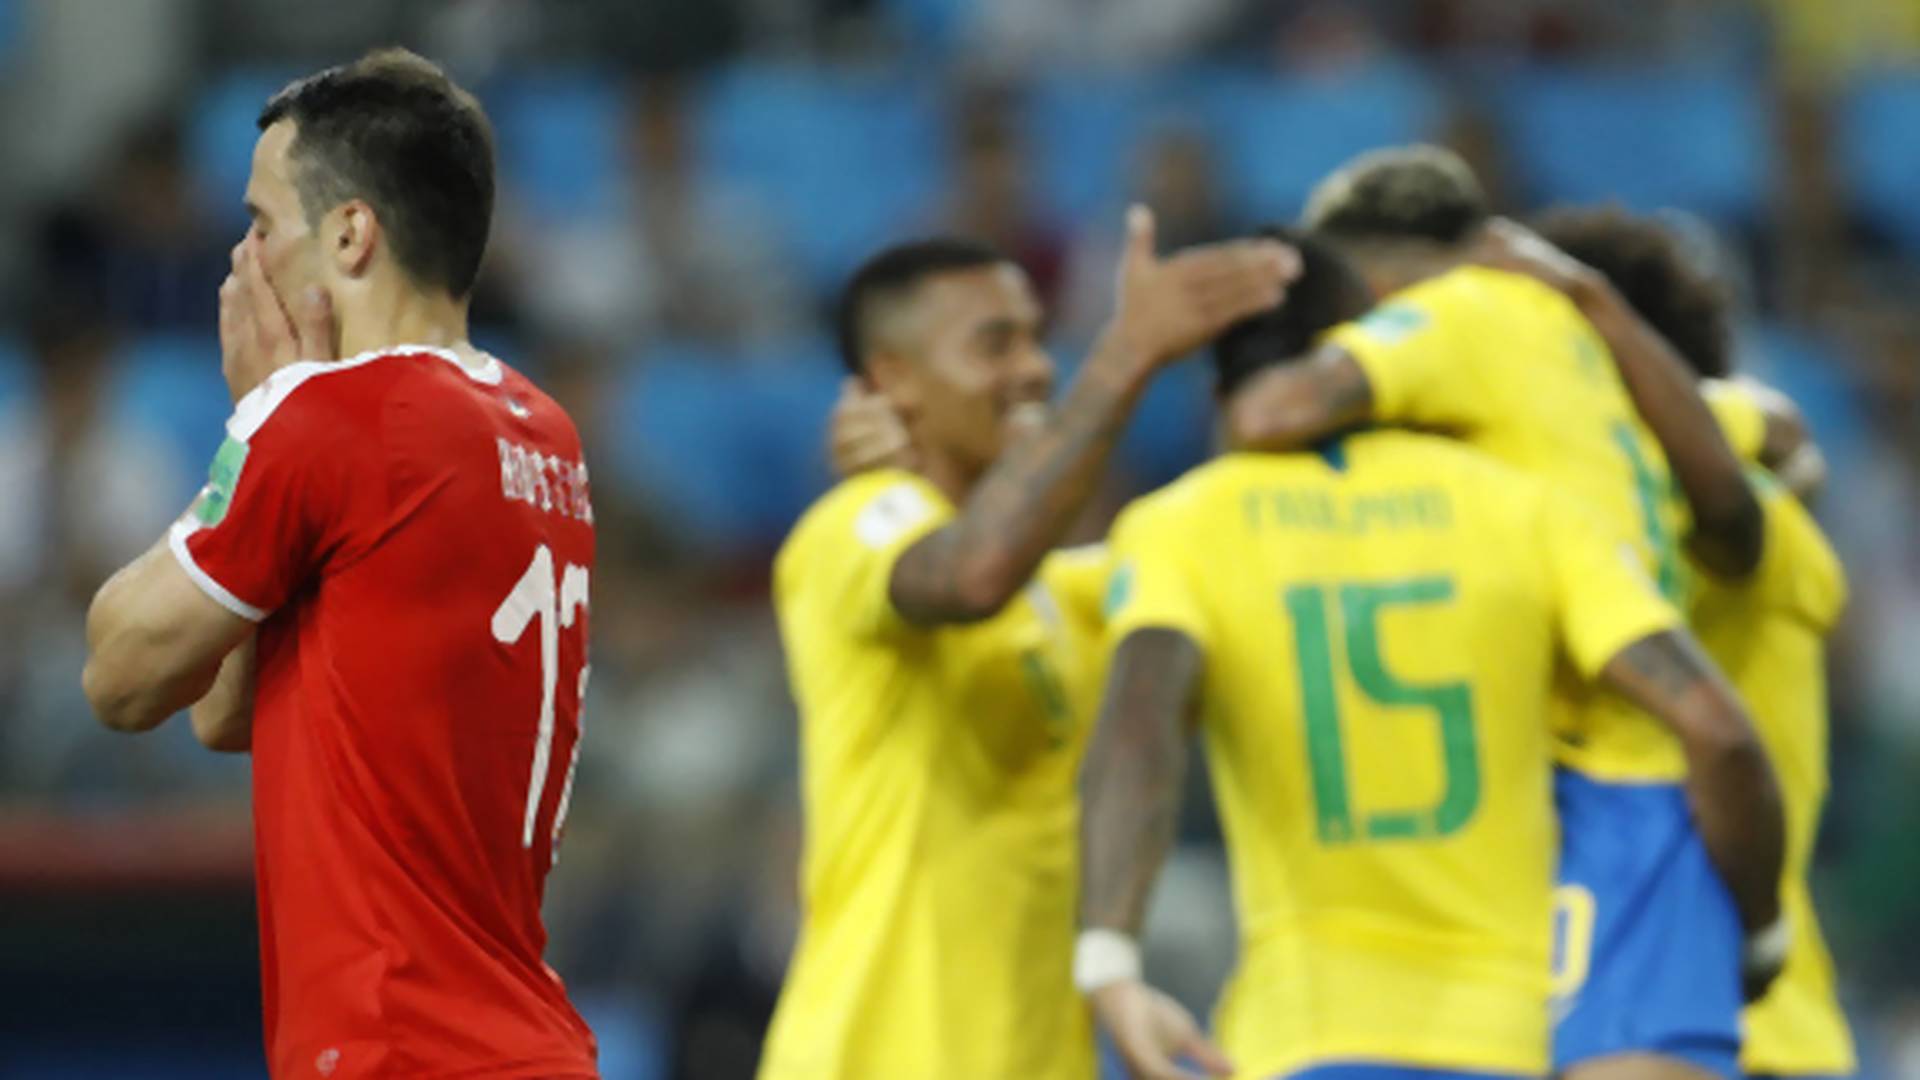 Fotka sa utakmice Srbija - Brazil koja pokazuje ko je pravi pobednik